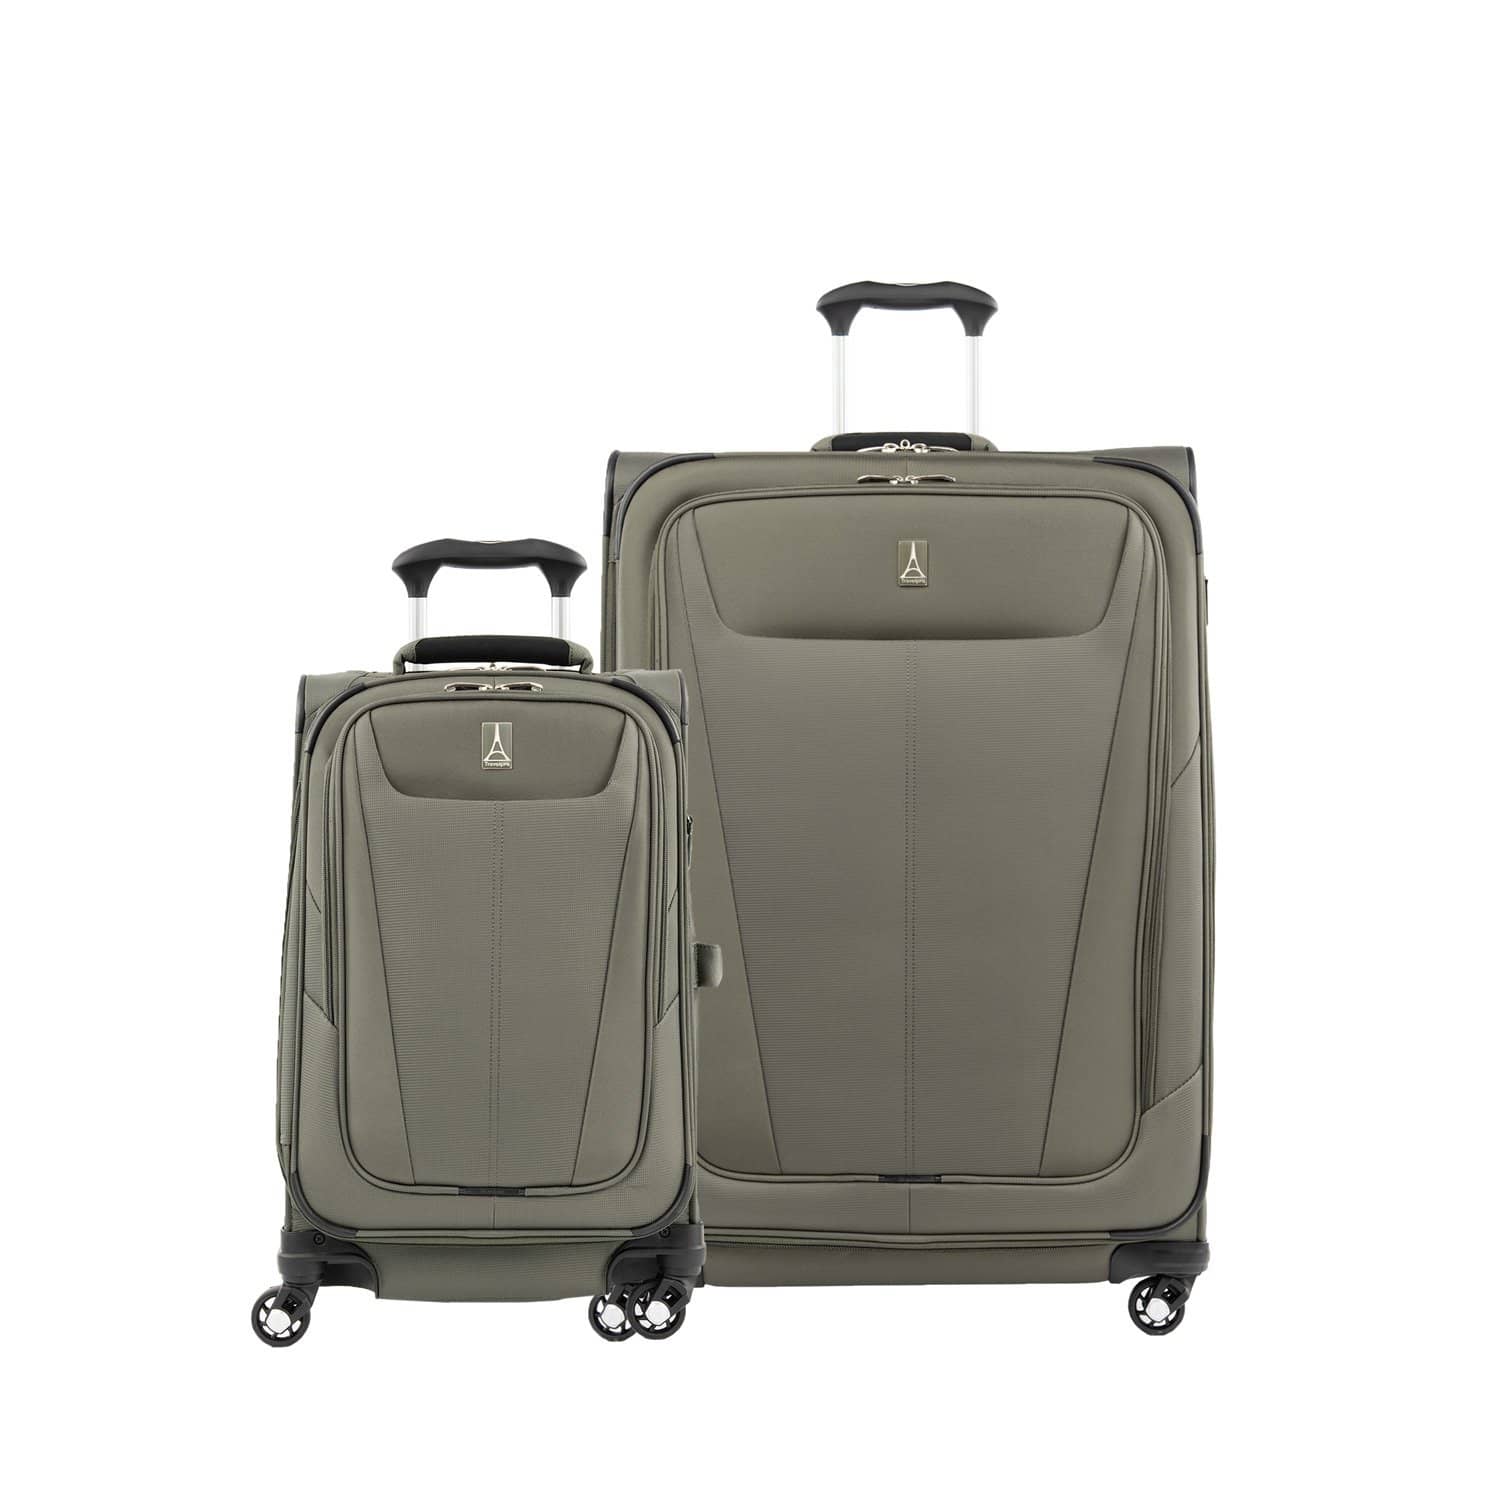 Travelpro Maxlite Luggage Set